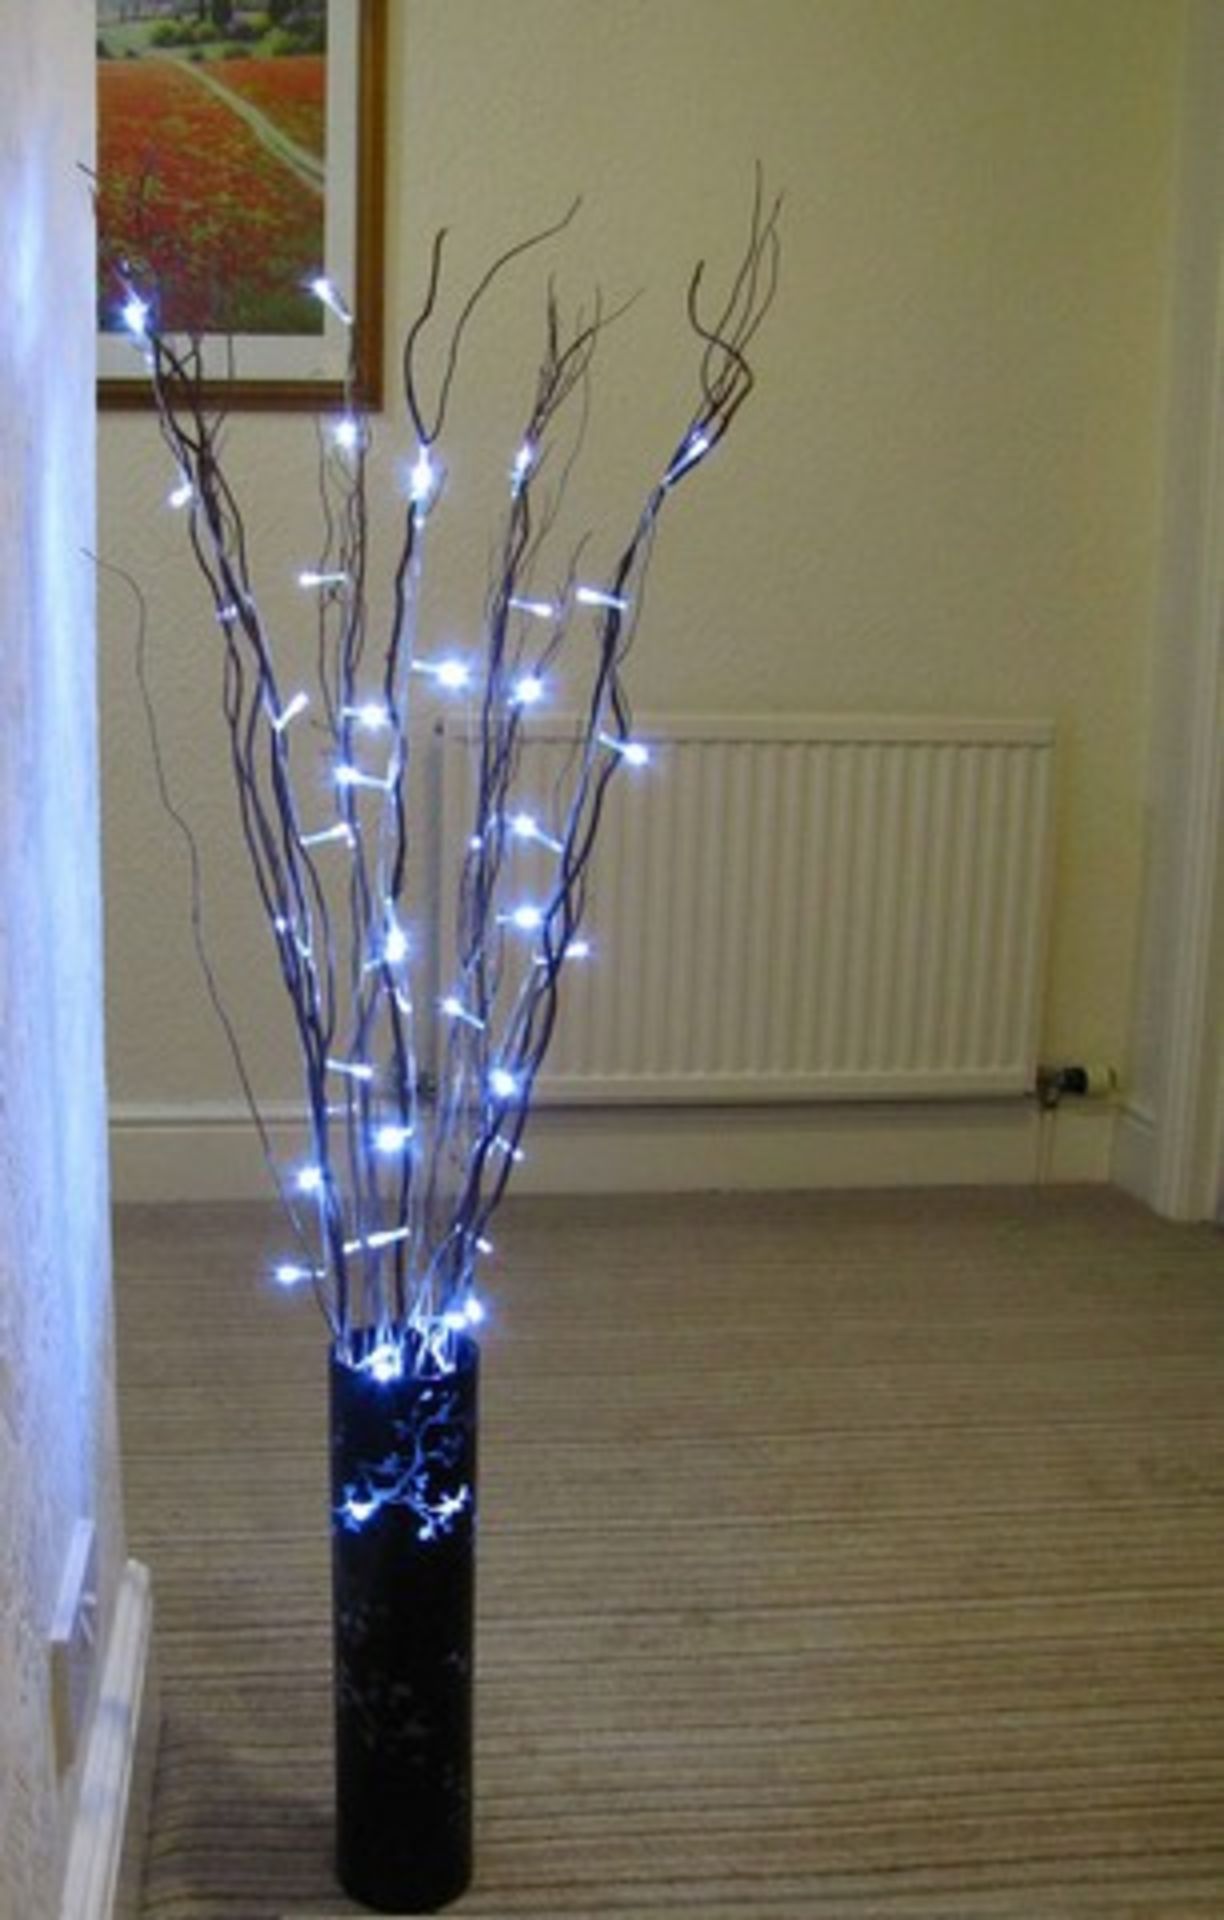 V Brand New Set of Twig Lights (50 LED) Includes Indoor Rated Mains Transformer Height 120cm ISP £